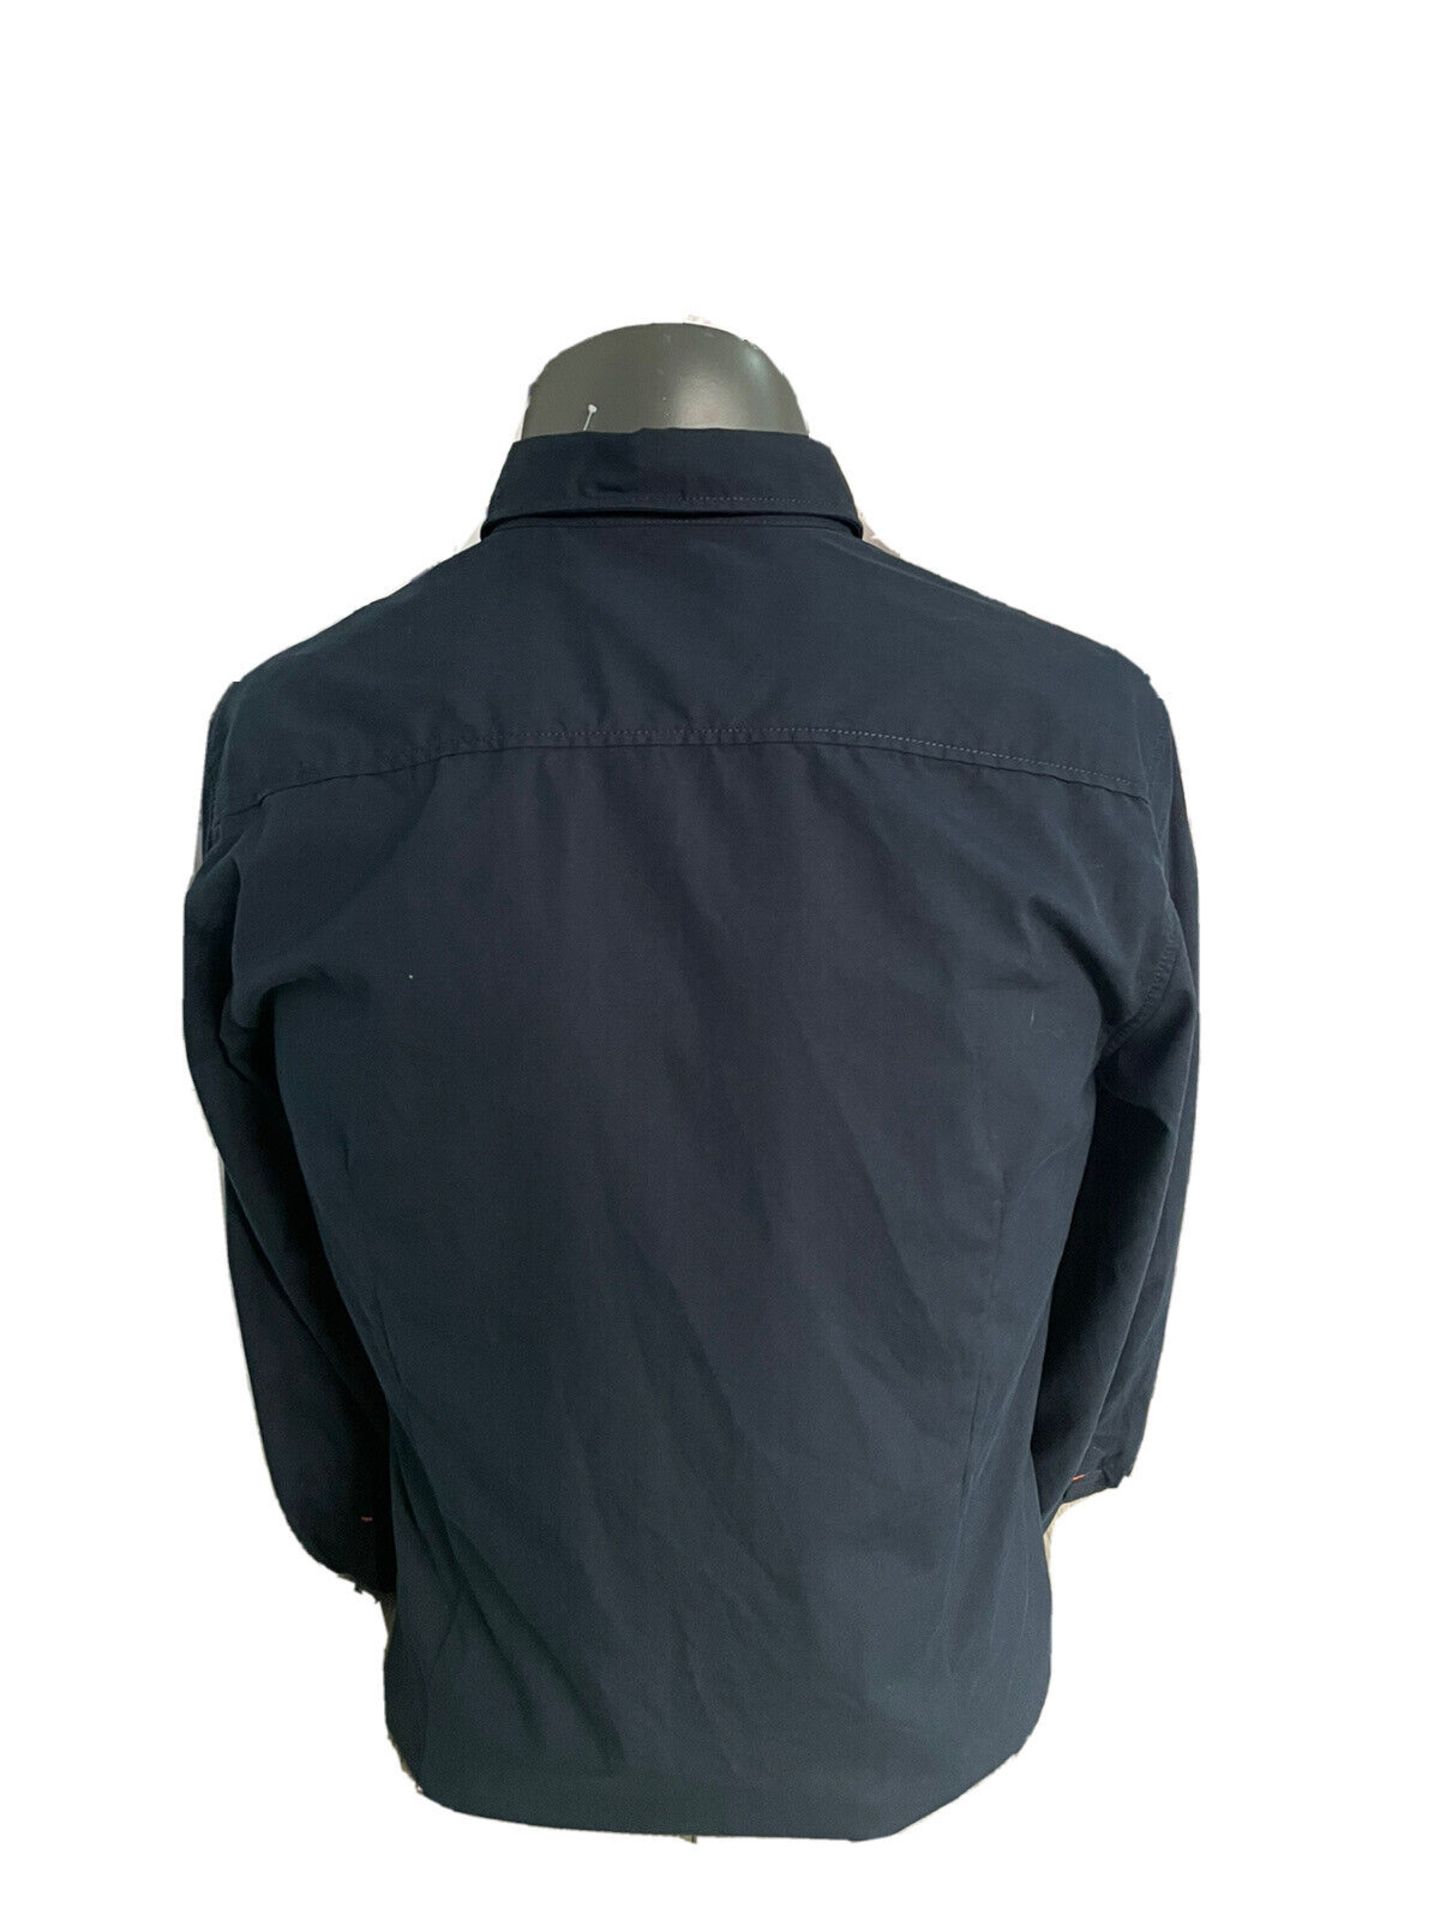 Hugo boss shirt size m RRP £96 - Image 2 of 2